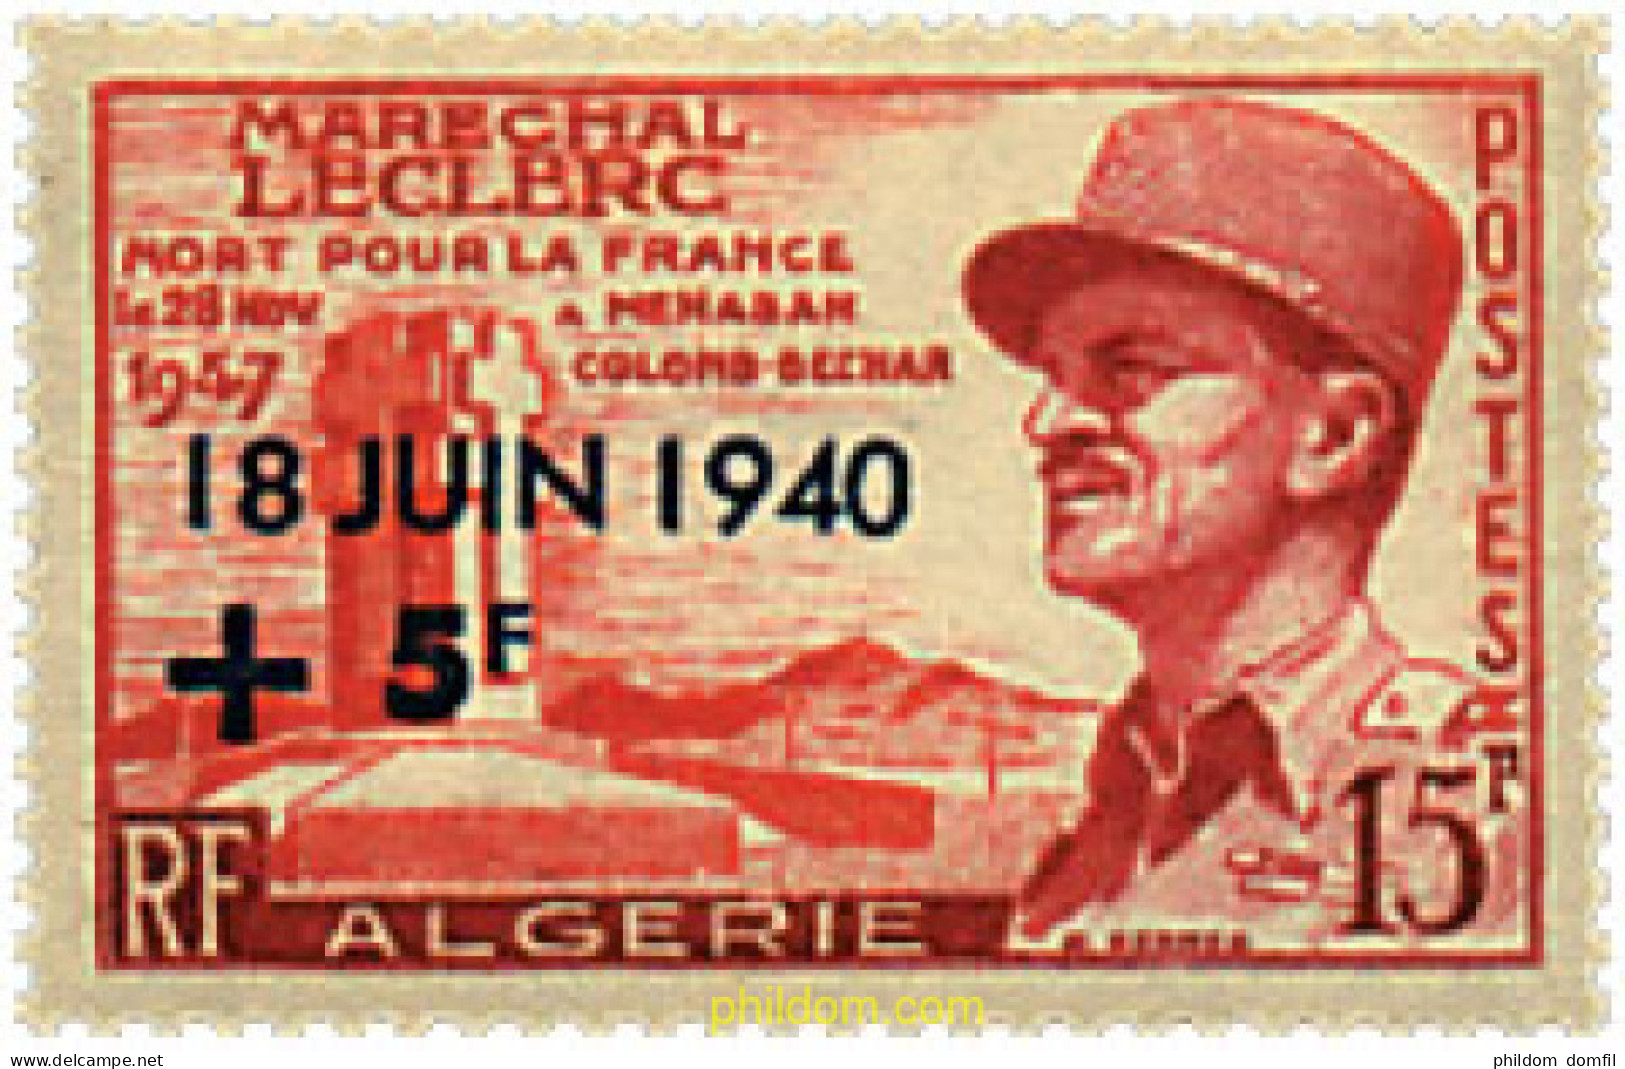 193417 MNH ARGELIA 1957 PERSONAJES DE LEYENDA - Argelia (1962-...)